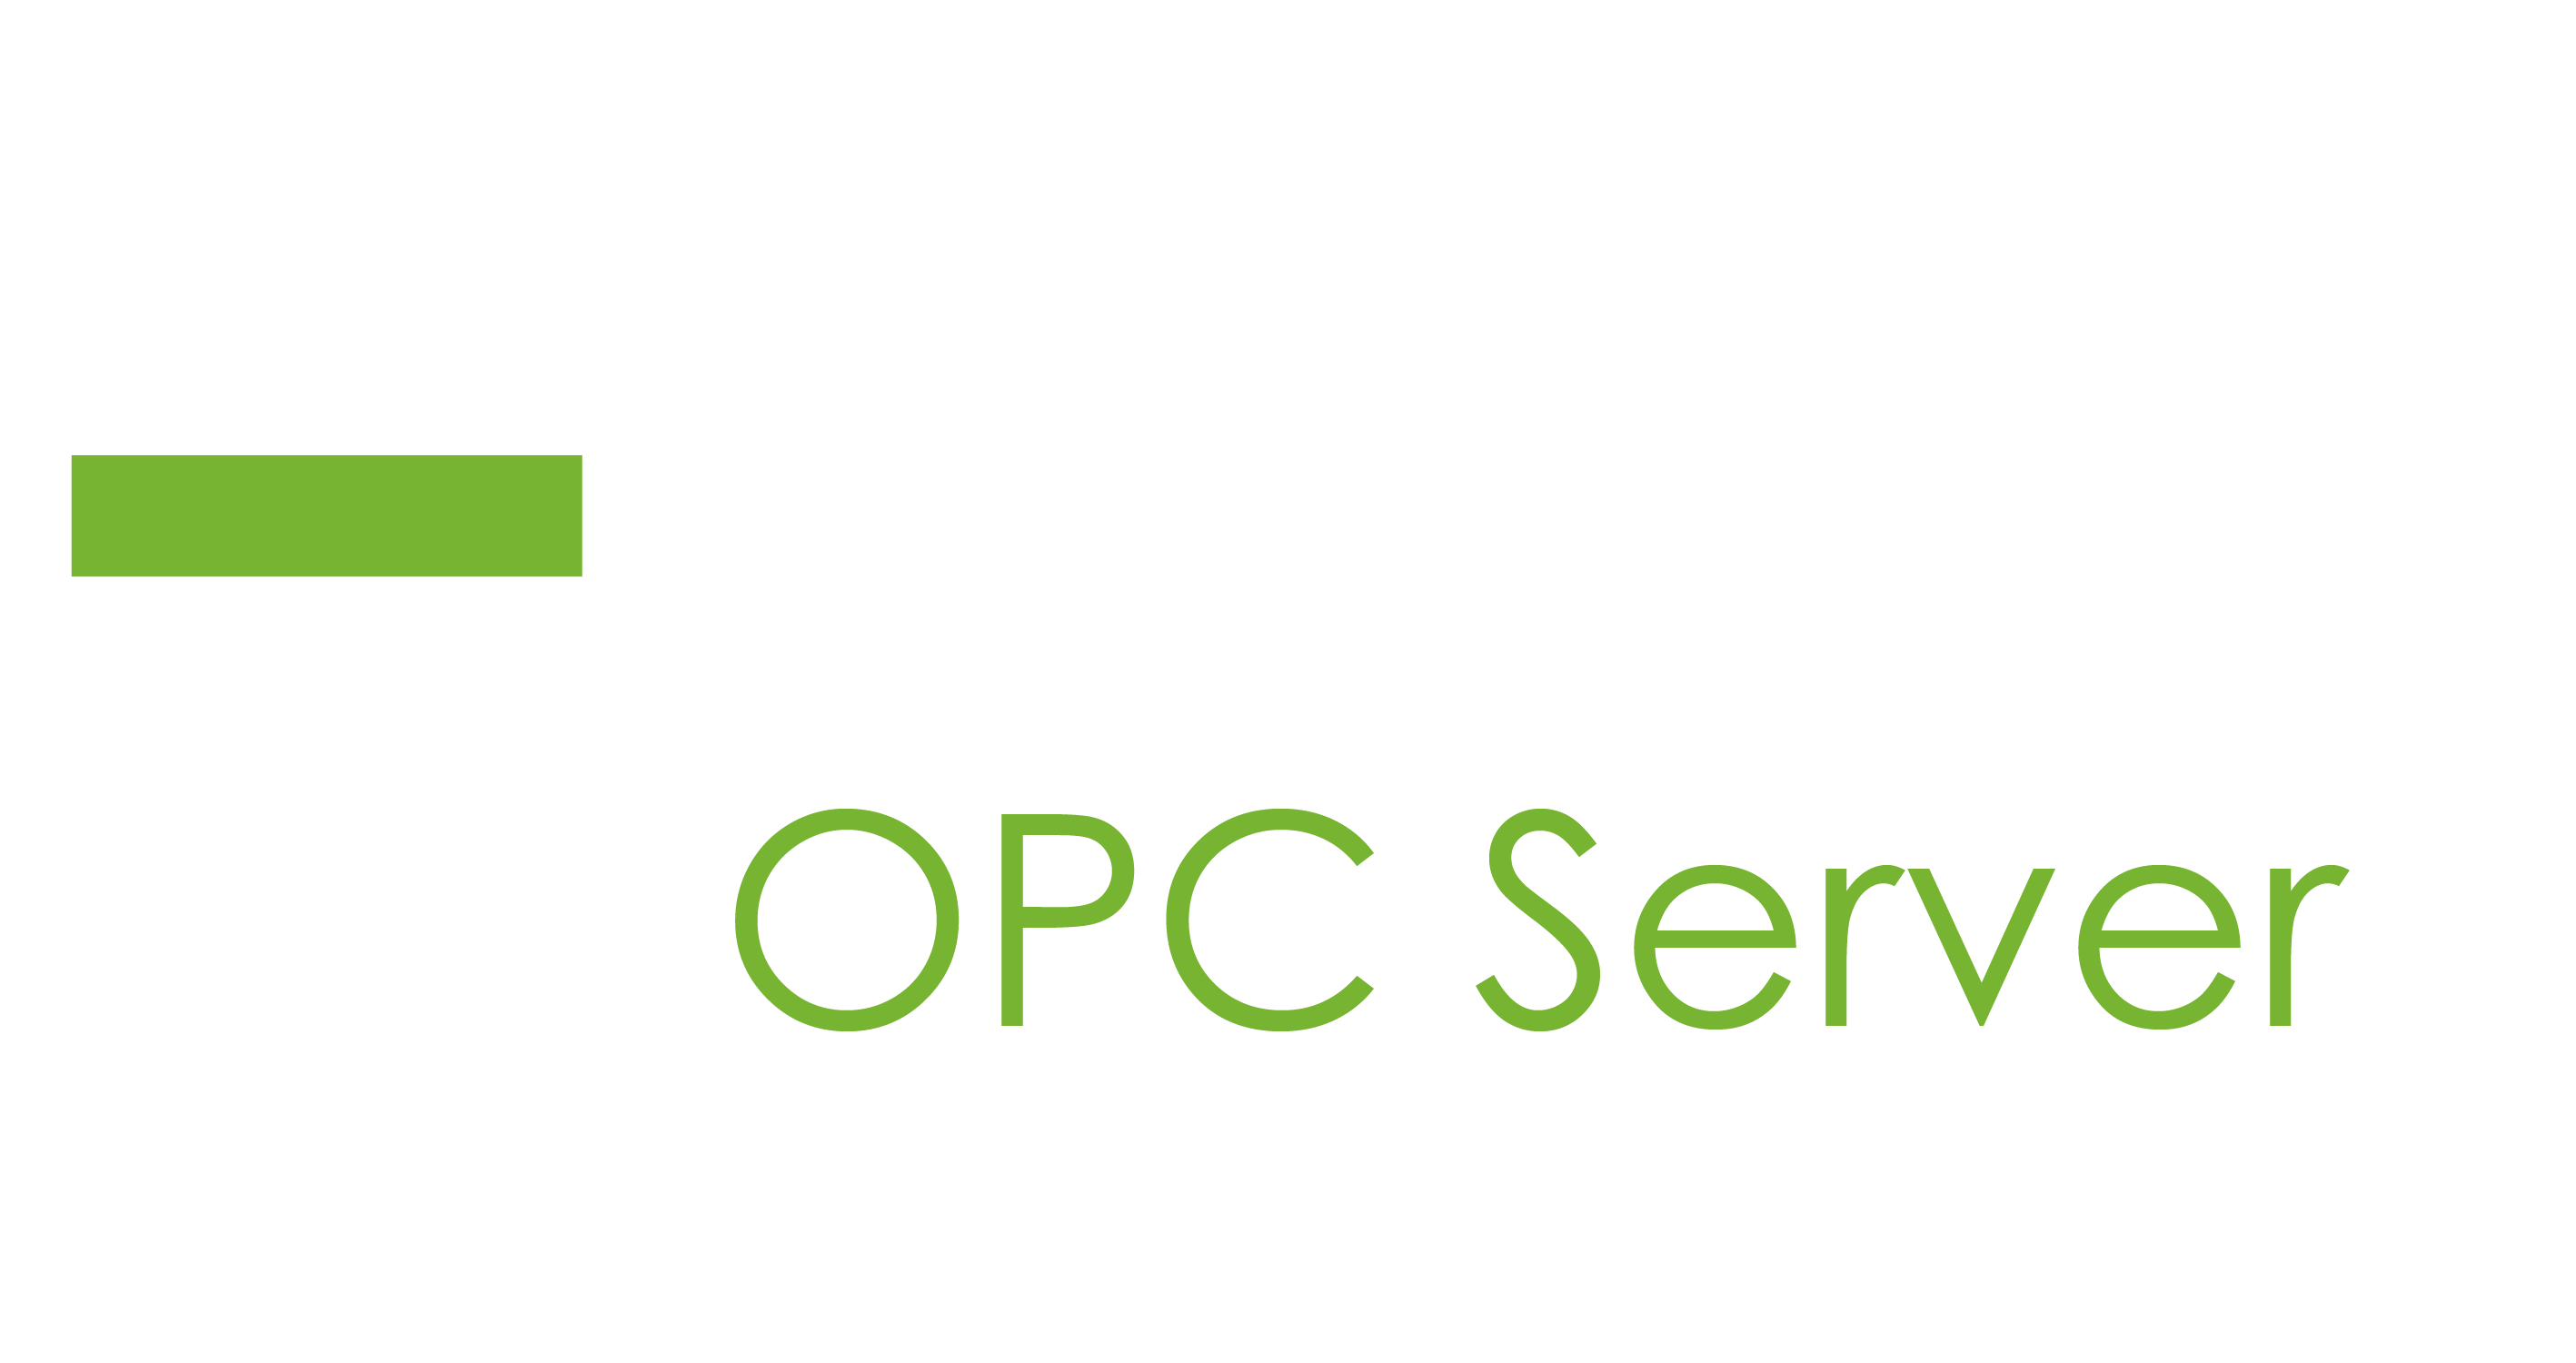 Kepware OPC Server